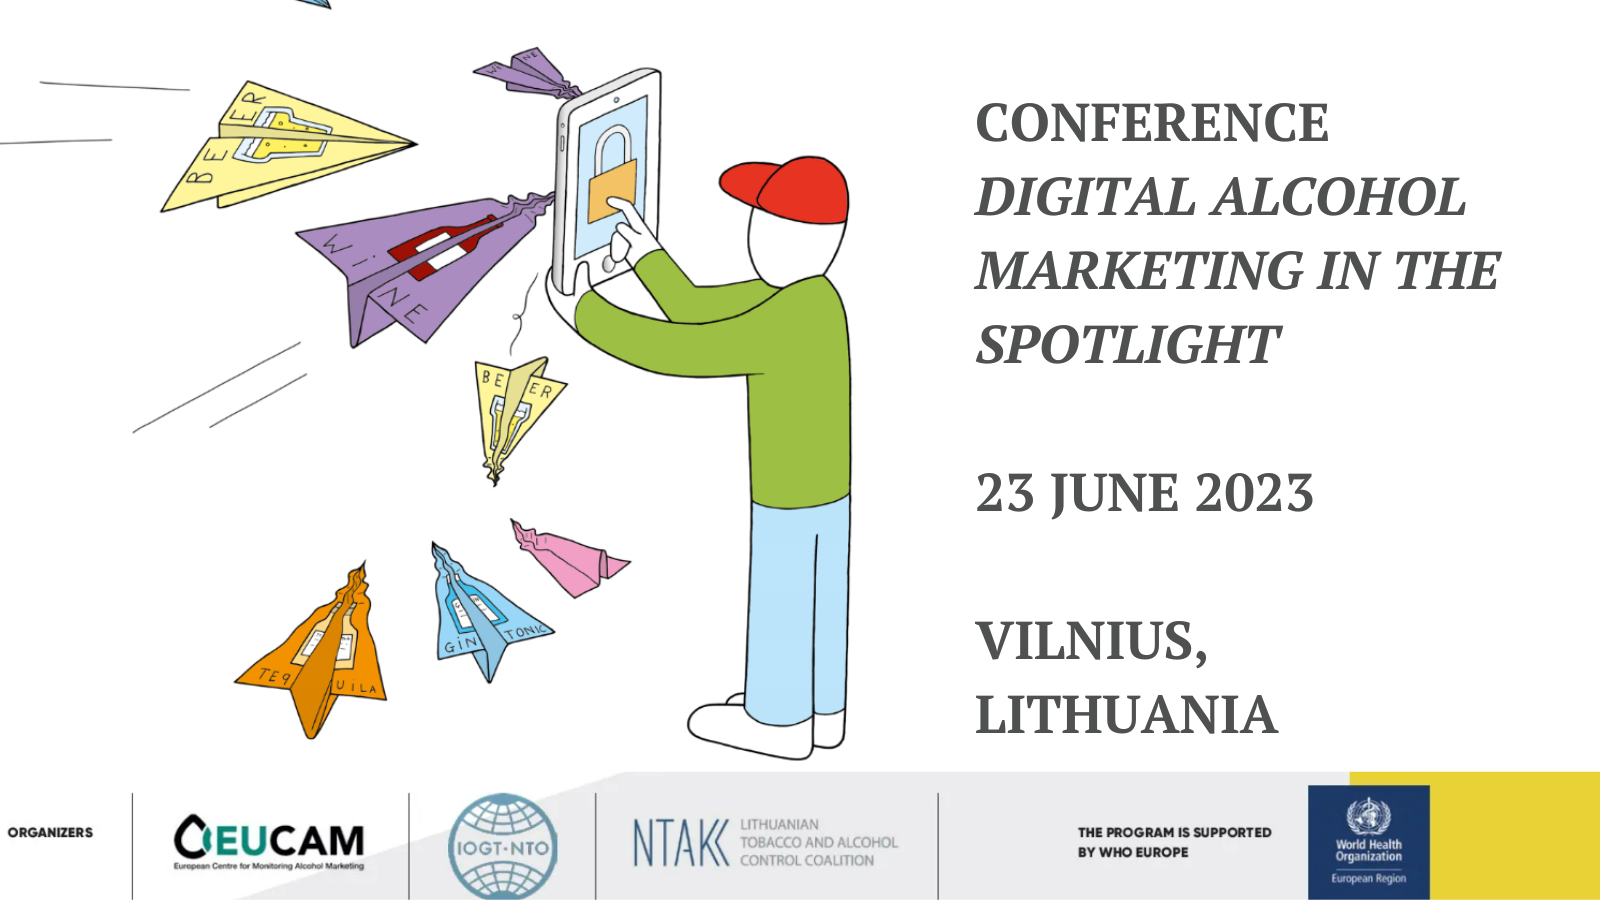 Conference Digital Alcohol Marketing in the Spotlight, 23 June 2023, Vilnius, Lithuania